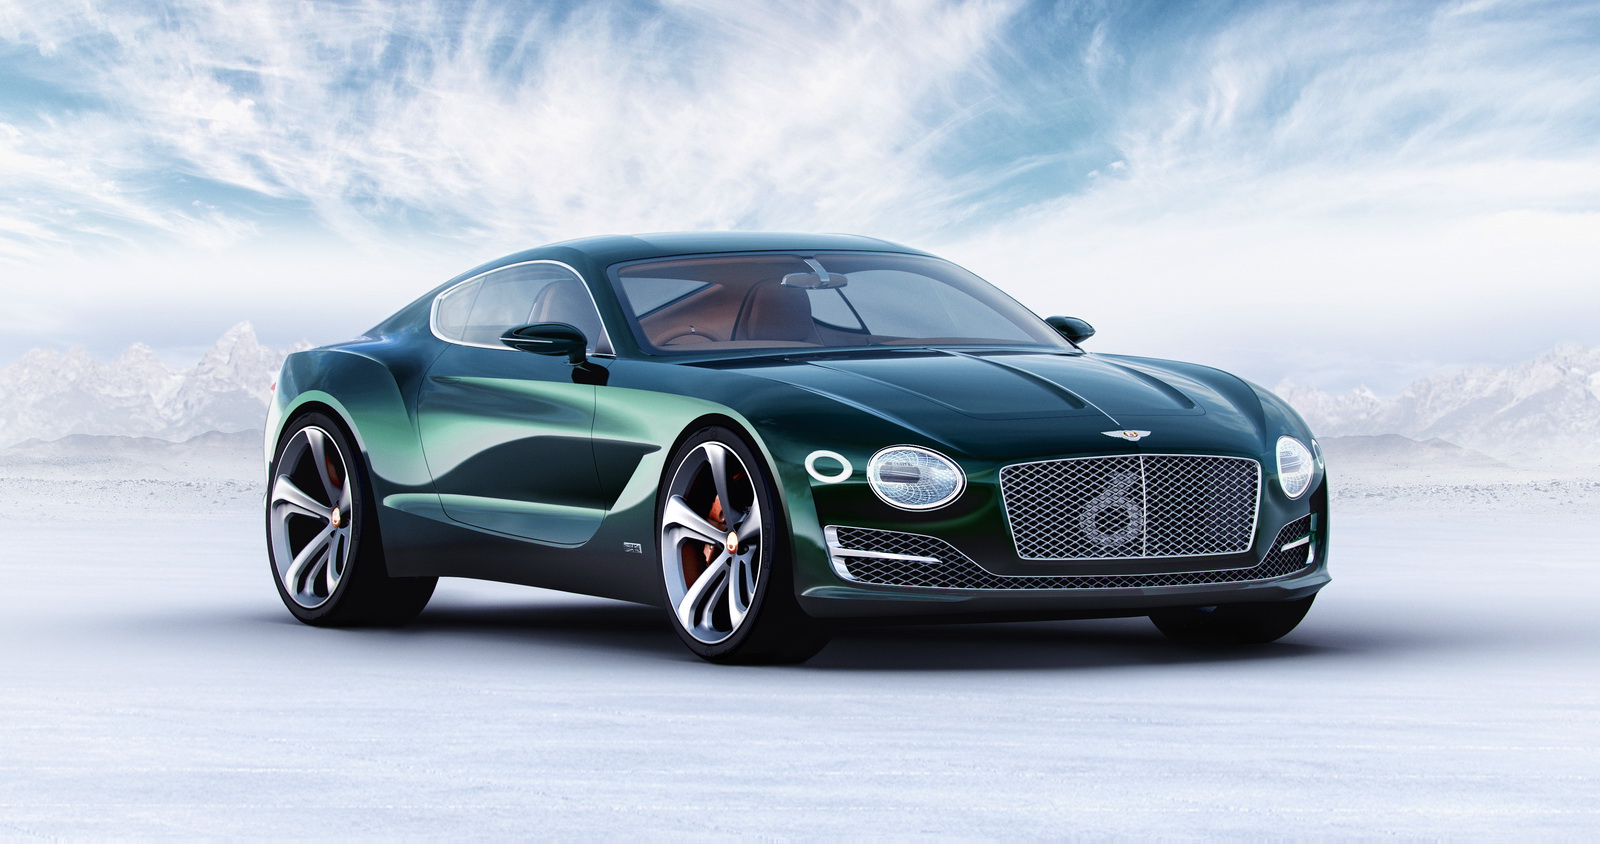 Bentley S Exp 10 Speed 6 Concept Wins At German Design Awards Carscoops